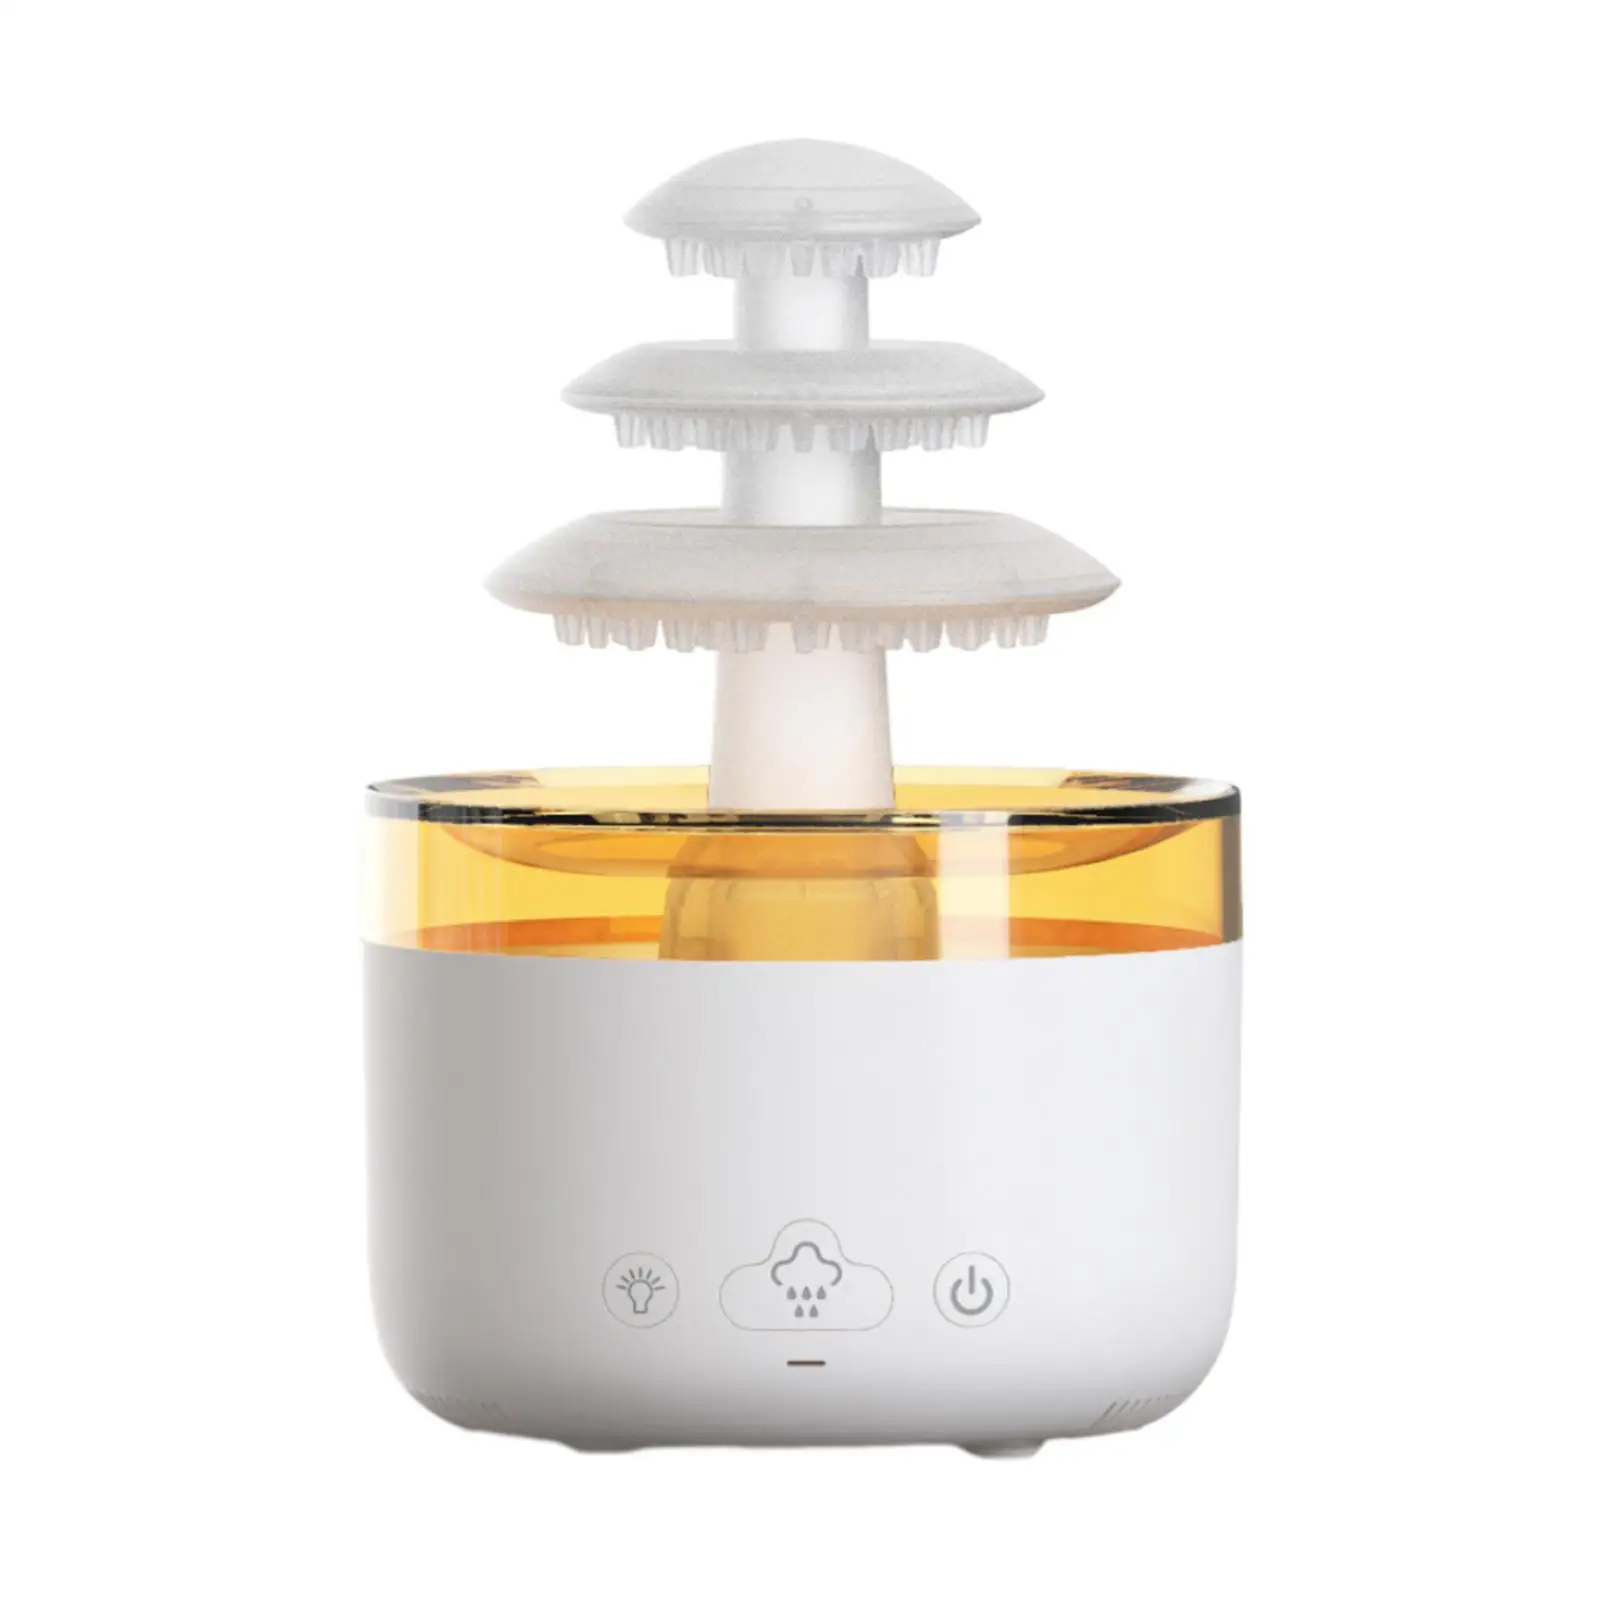 Essential Oil Diffuser Premium Portable 500ml Ornaments Air Humidifier for Yoga Room Bathroom Large Room Kitchen Home Decor